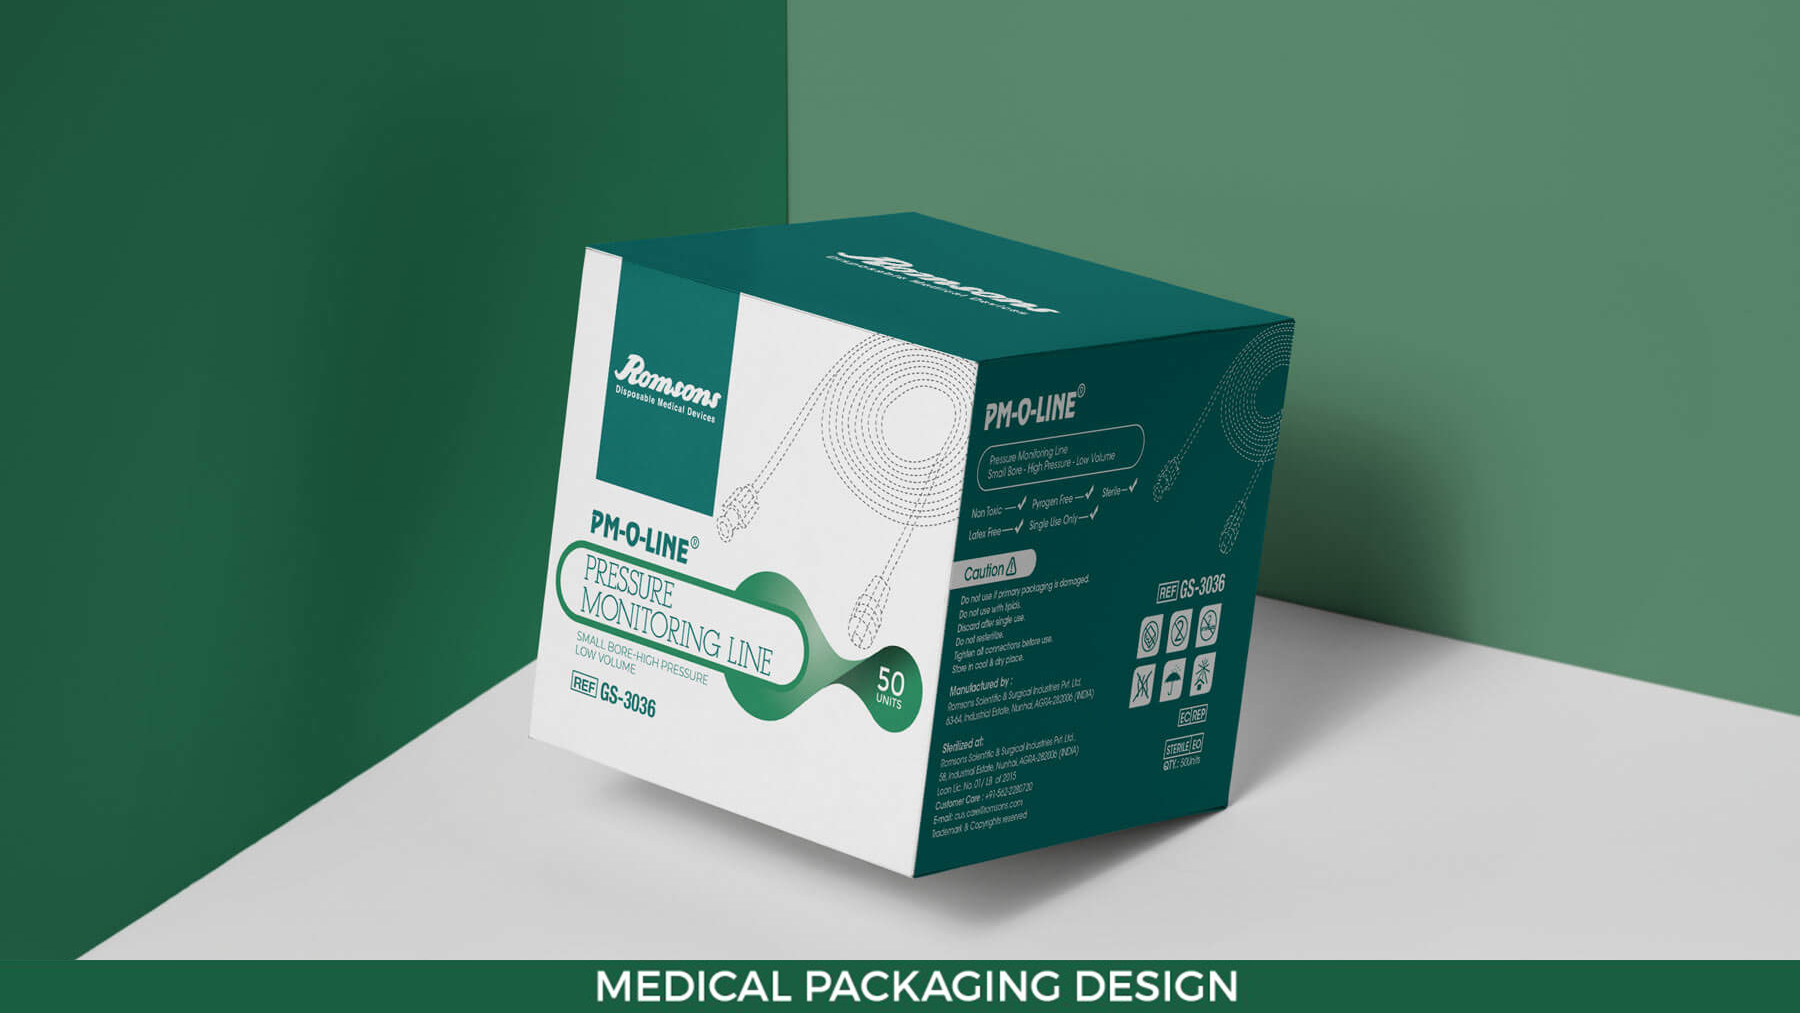 romsons medical packaging case study